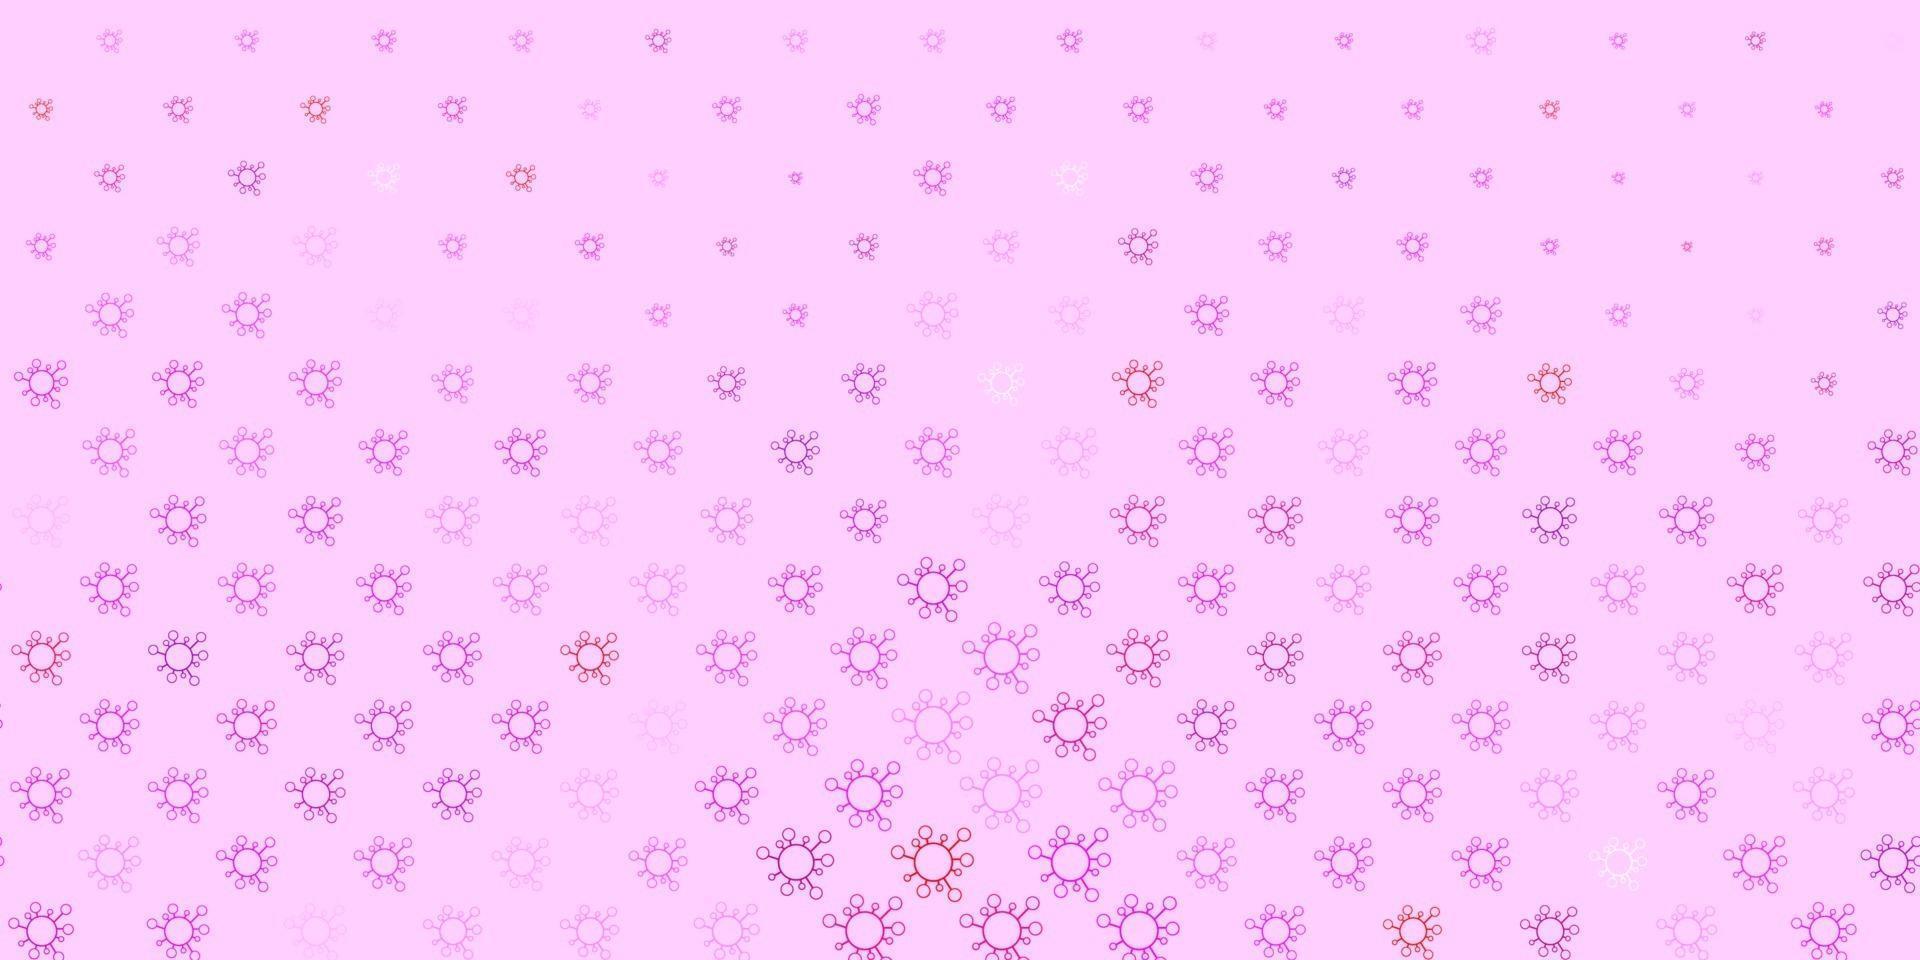 pano de fundo vector rosa claro roxo com símbolos de vírus.